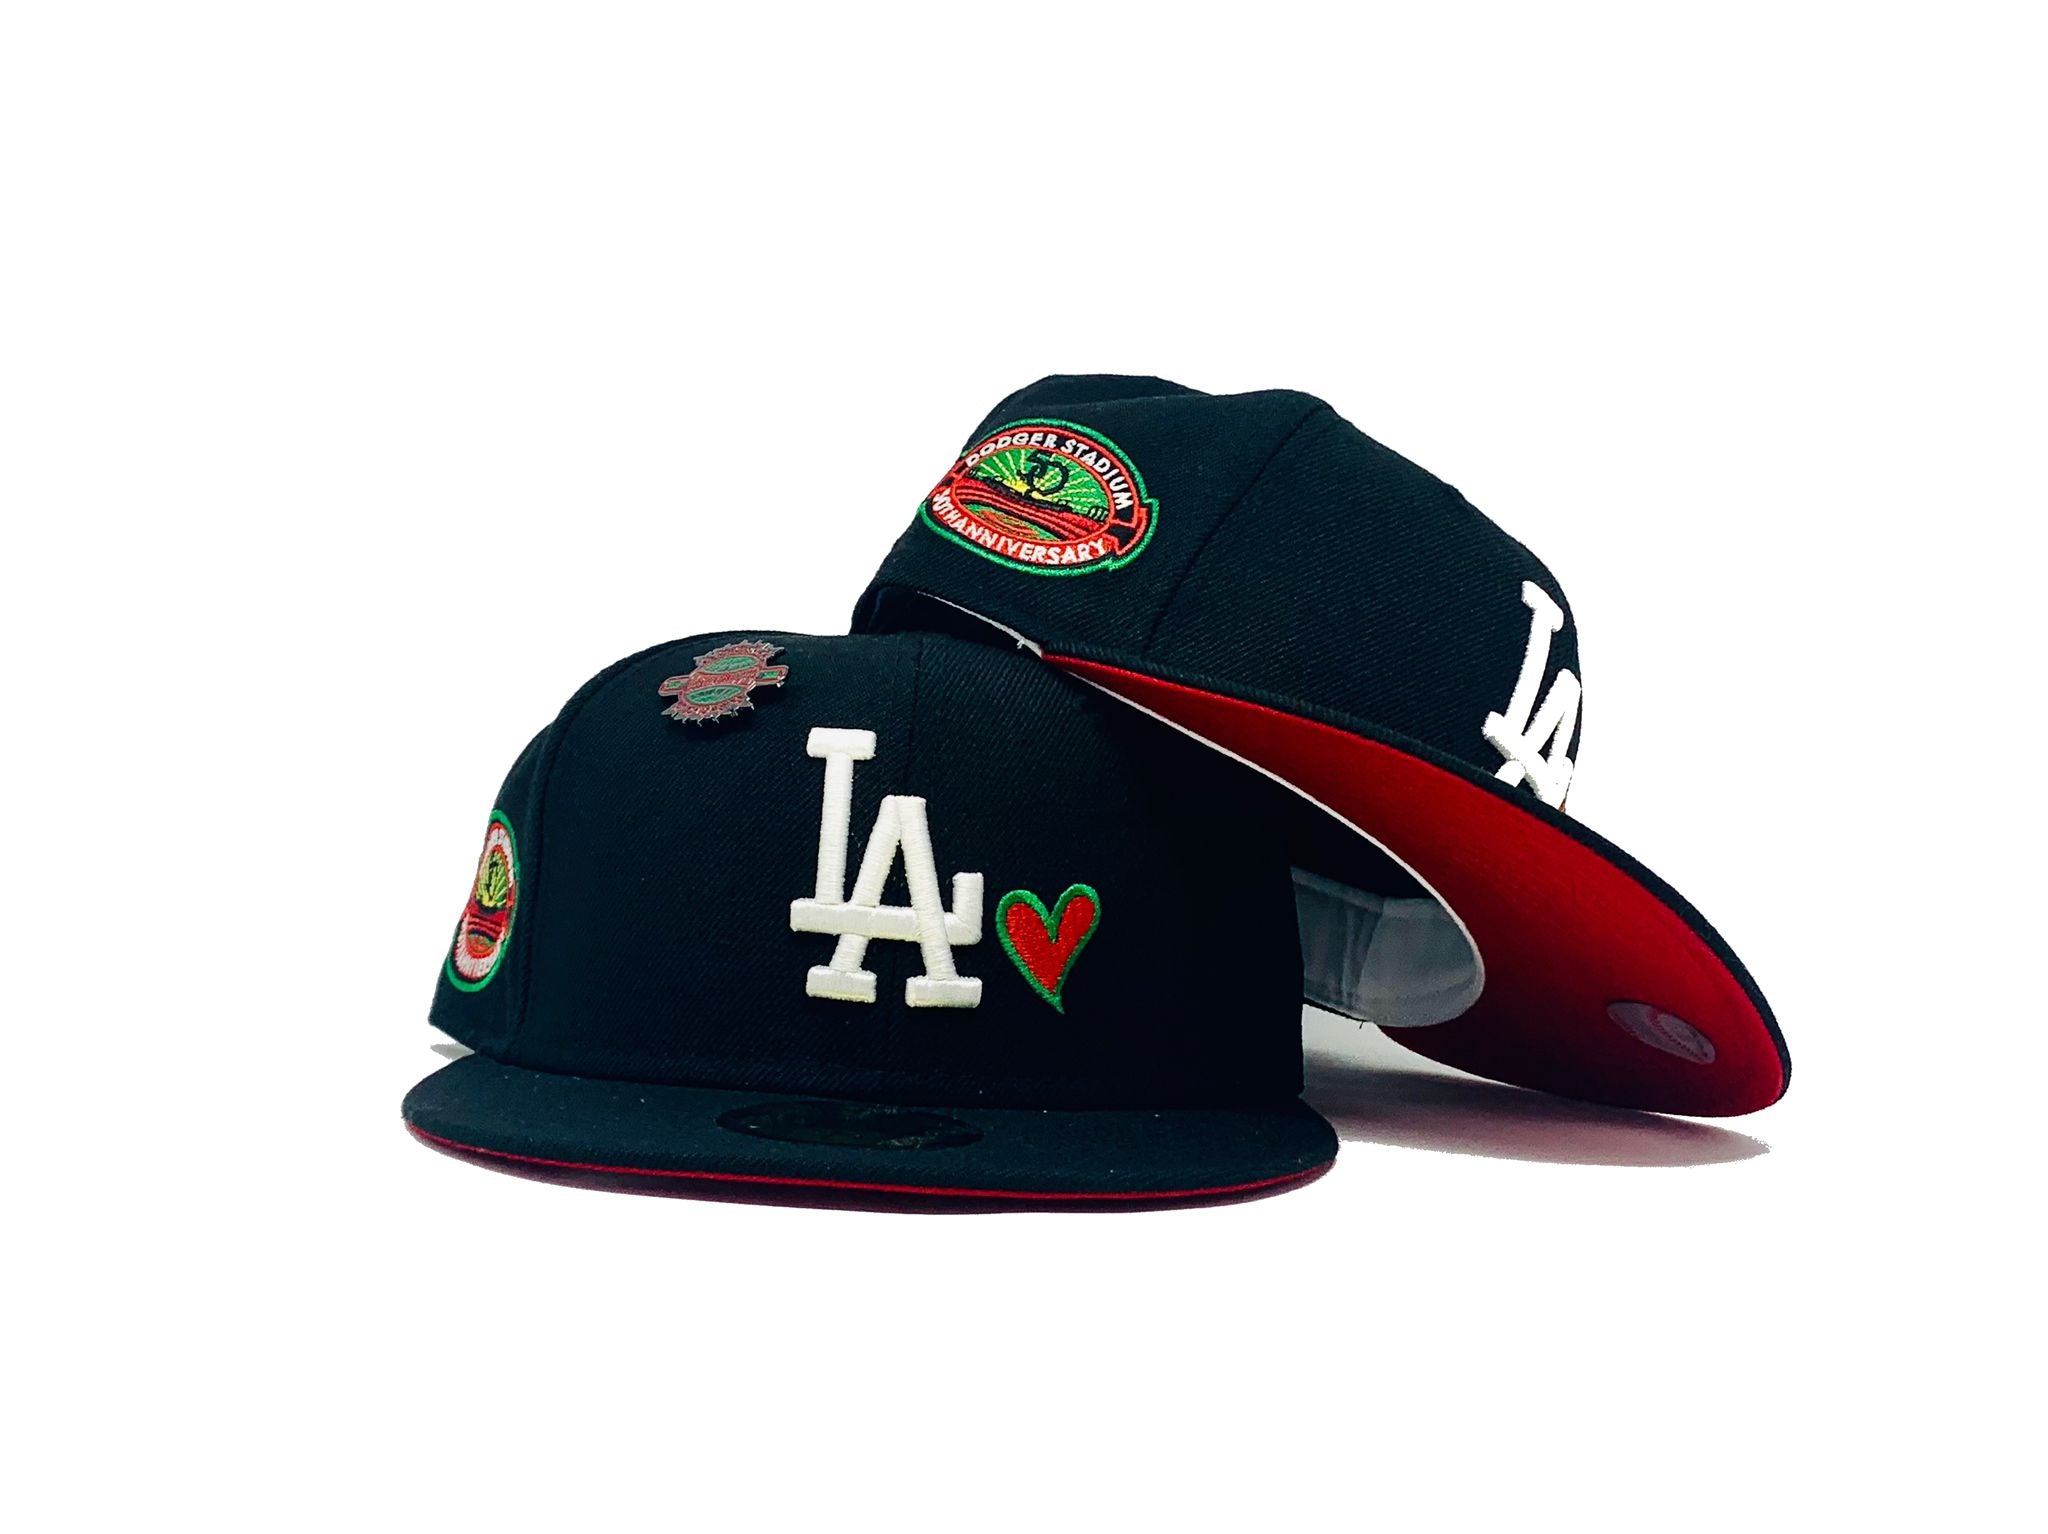 New Era, Accessories, 0th Anniversary La Dodgers Hat With Red Brim